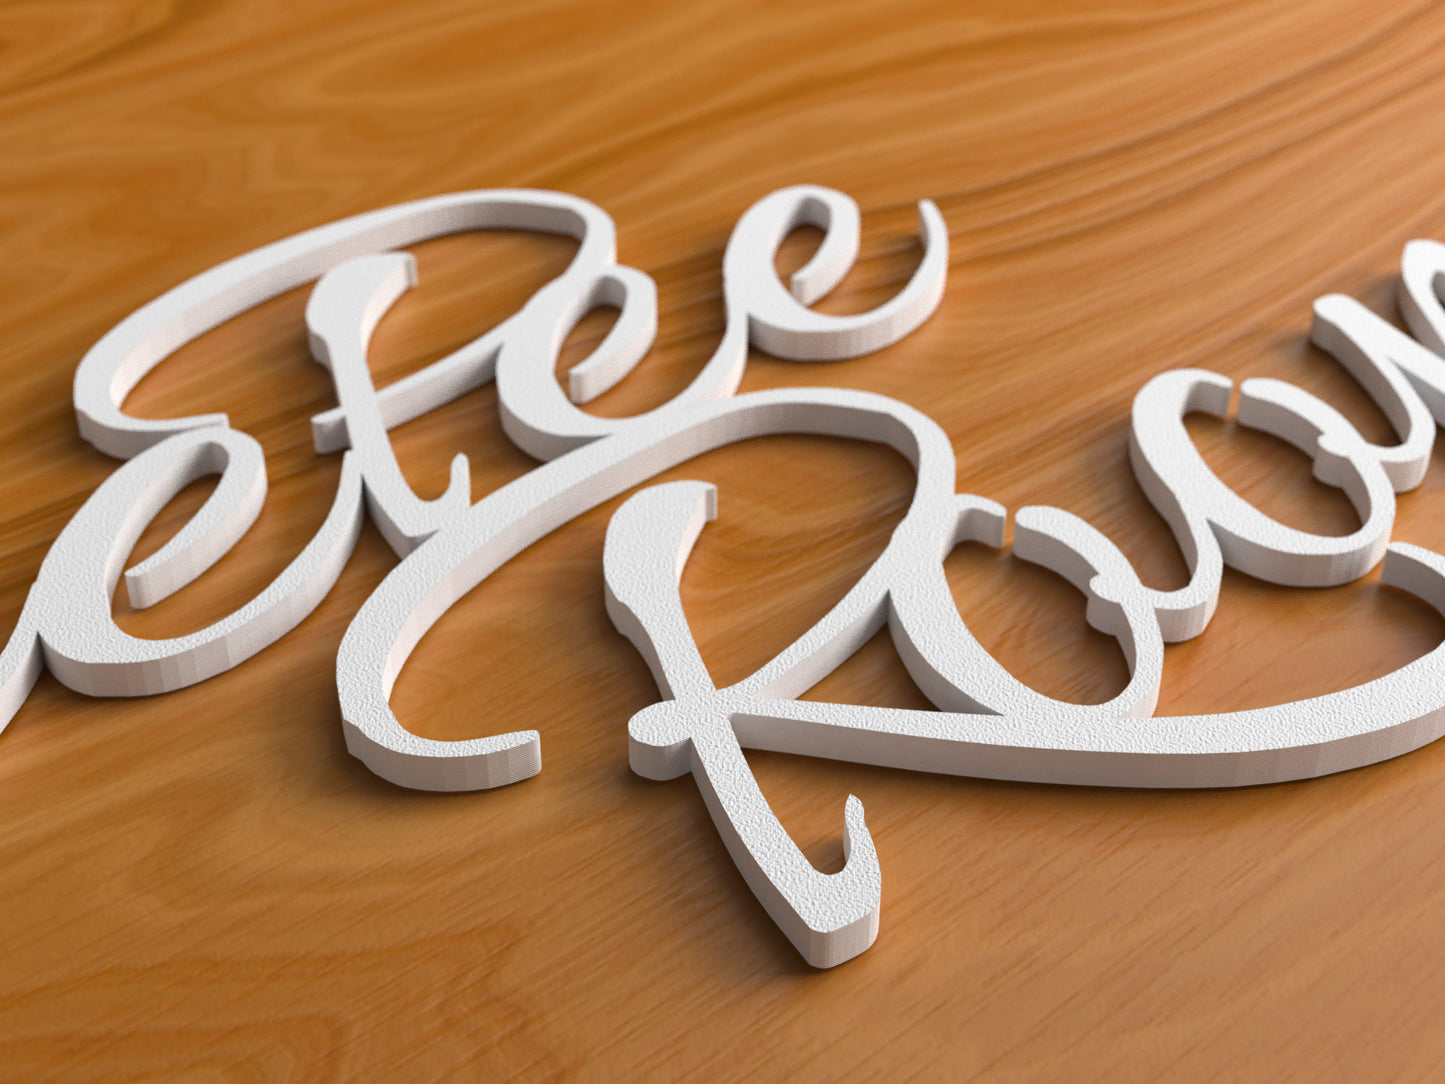 Pee Pee Room Türschild 3D Schriftzüge Selbstklebend